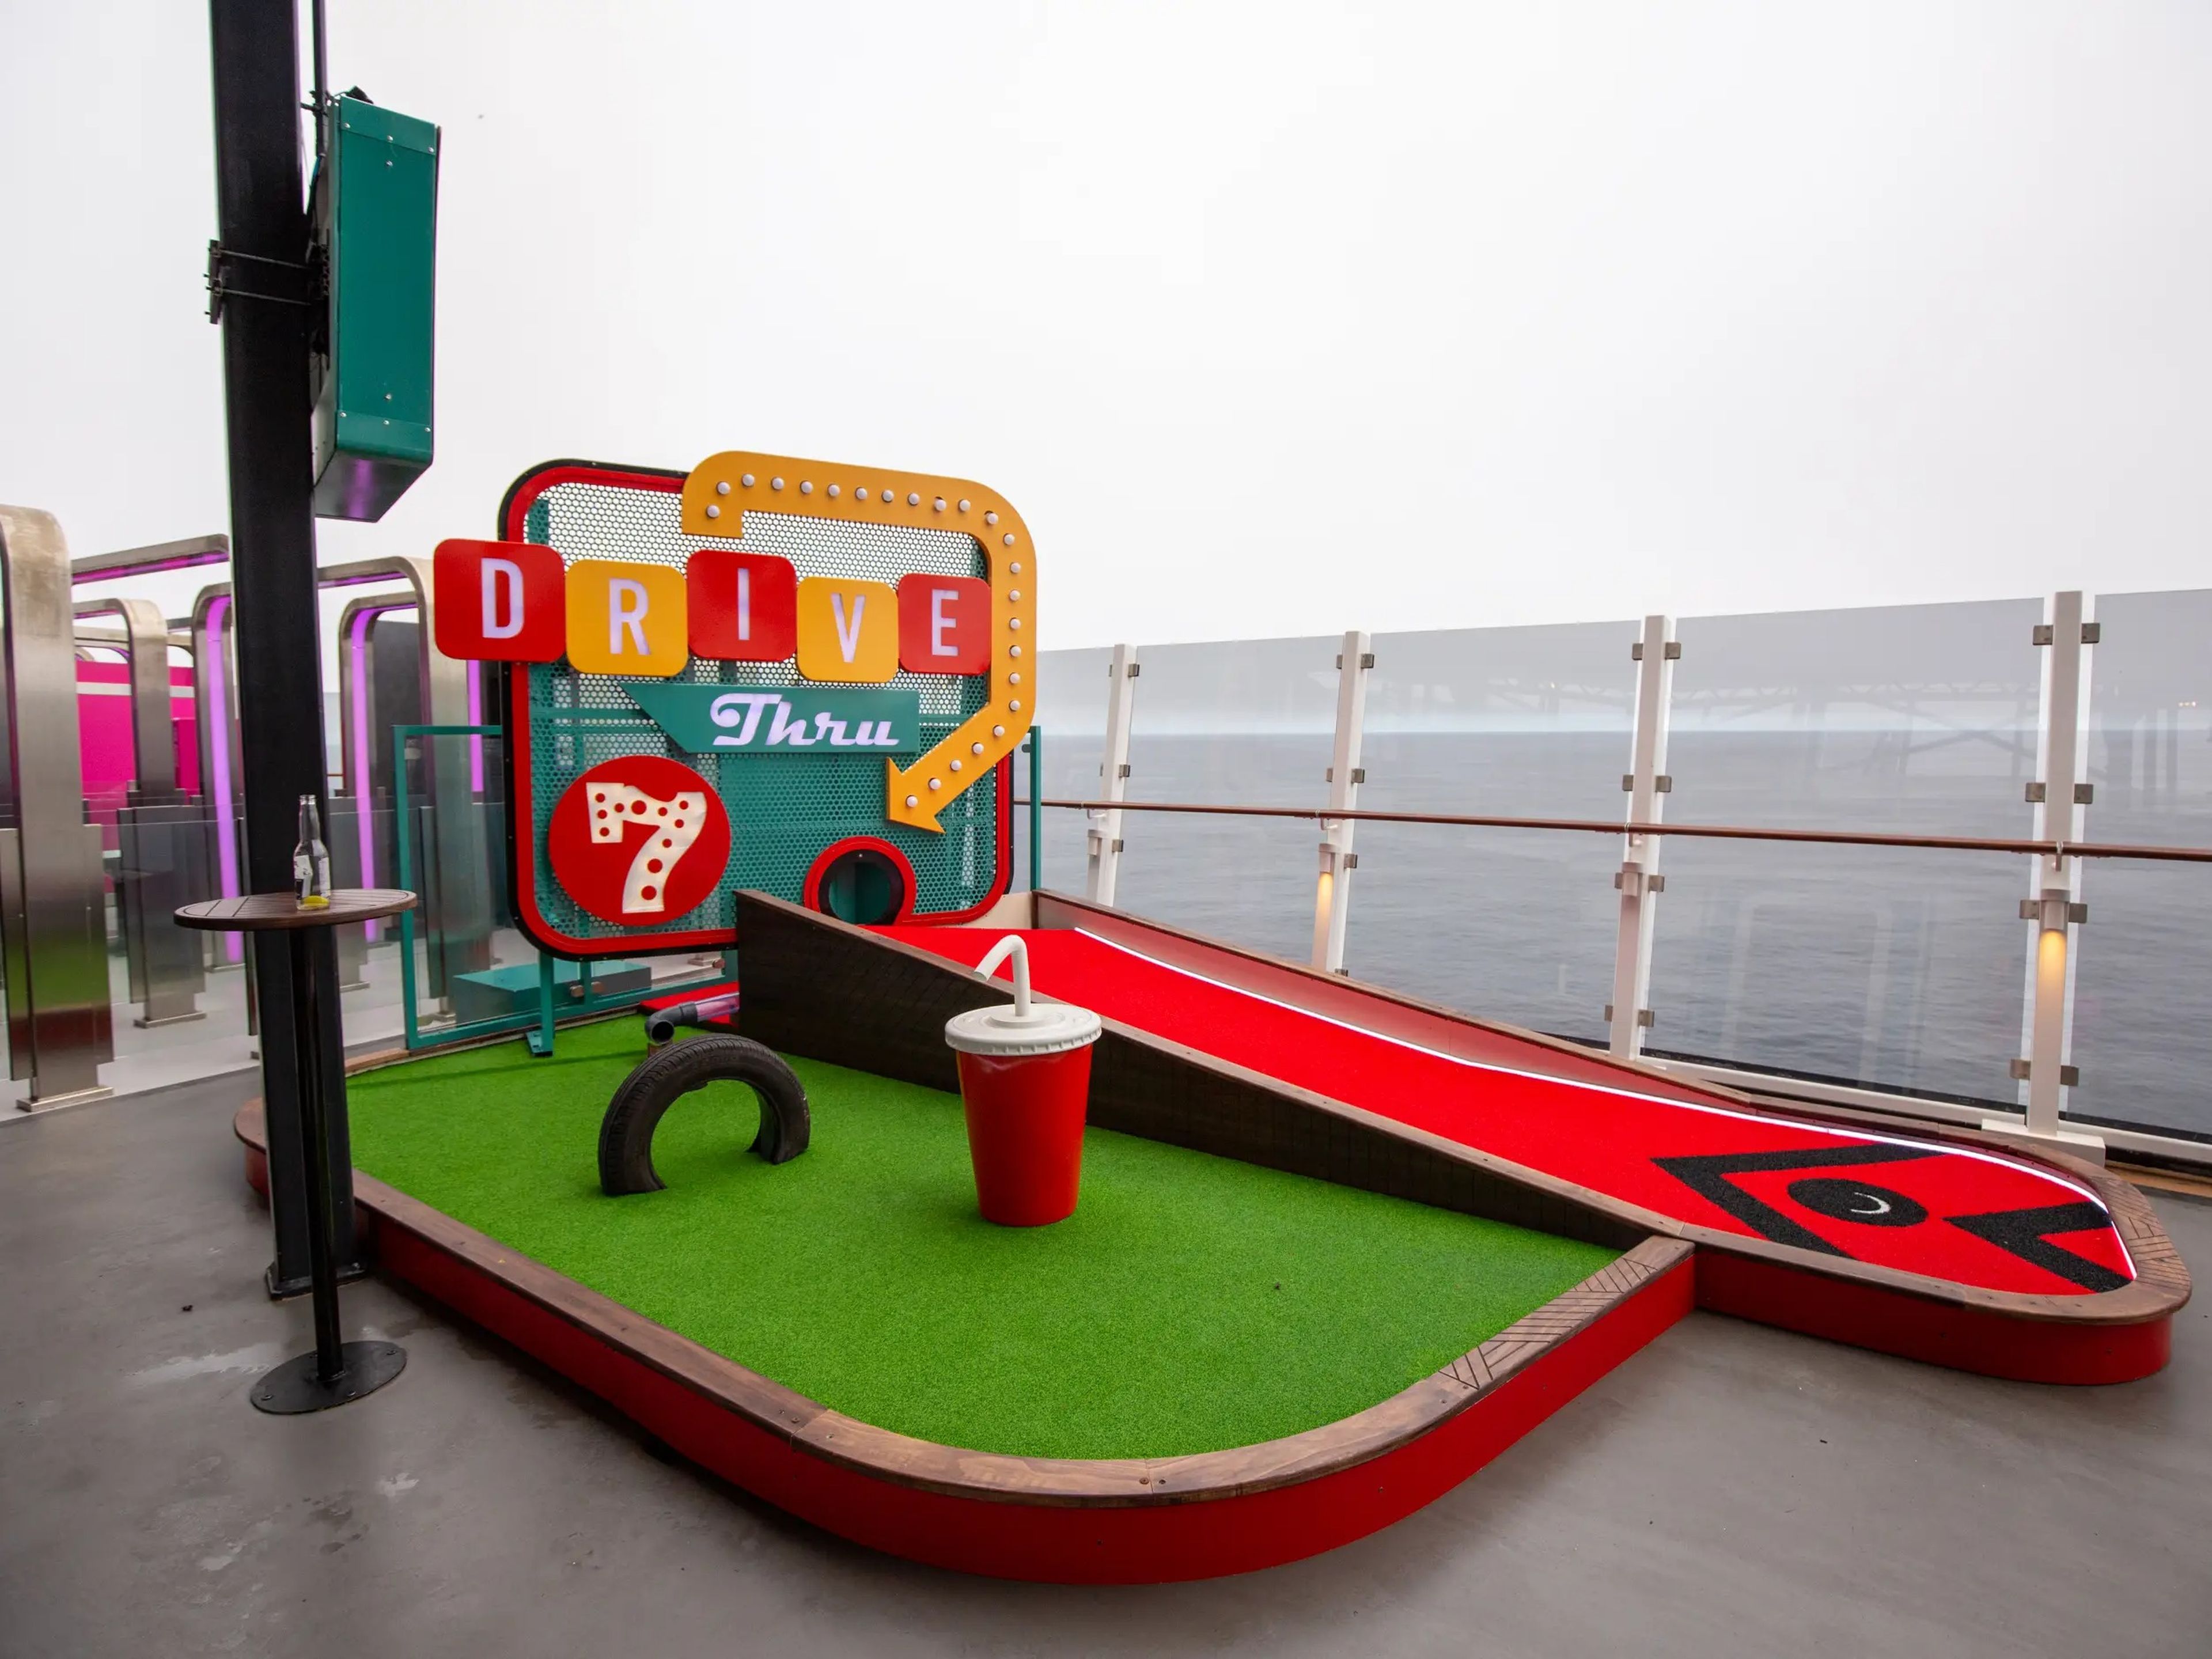 The amenities inside Norwegian Cruise Line's Norwegian Prima cruise ship.